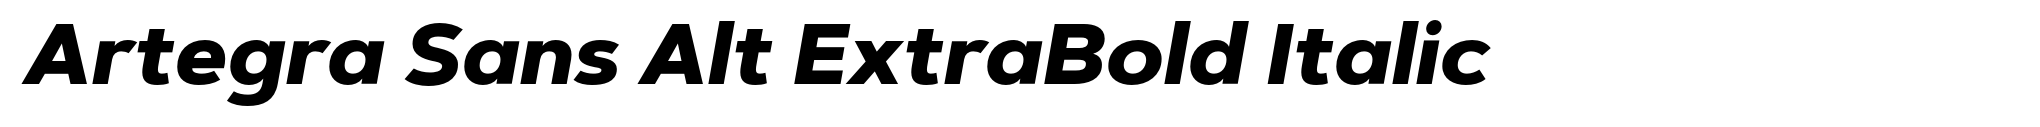 Artegra Sans Alt ExtraBold Italic image